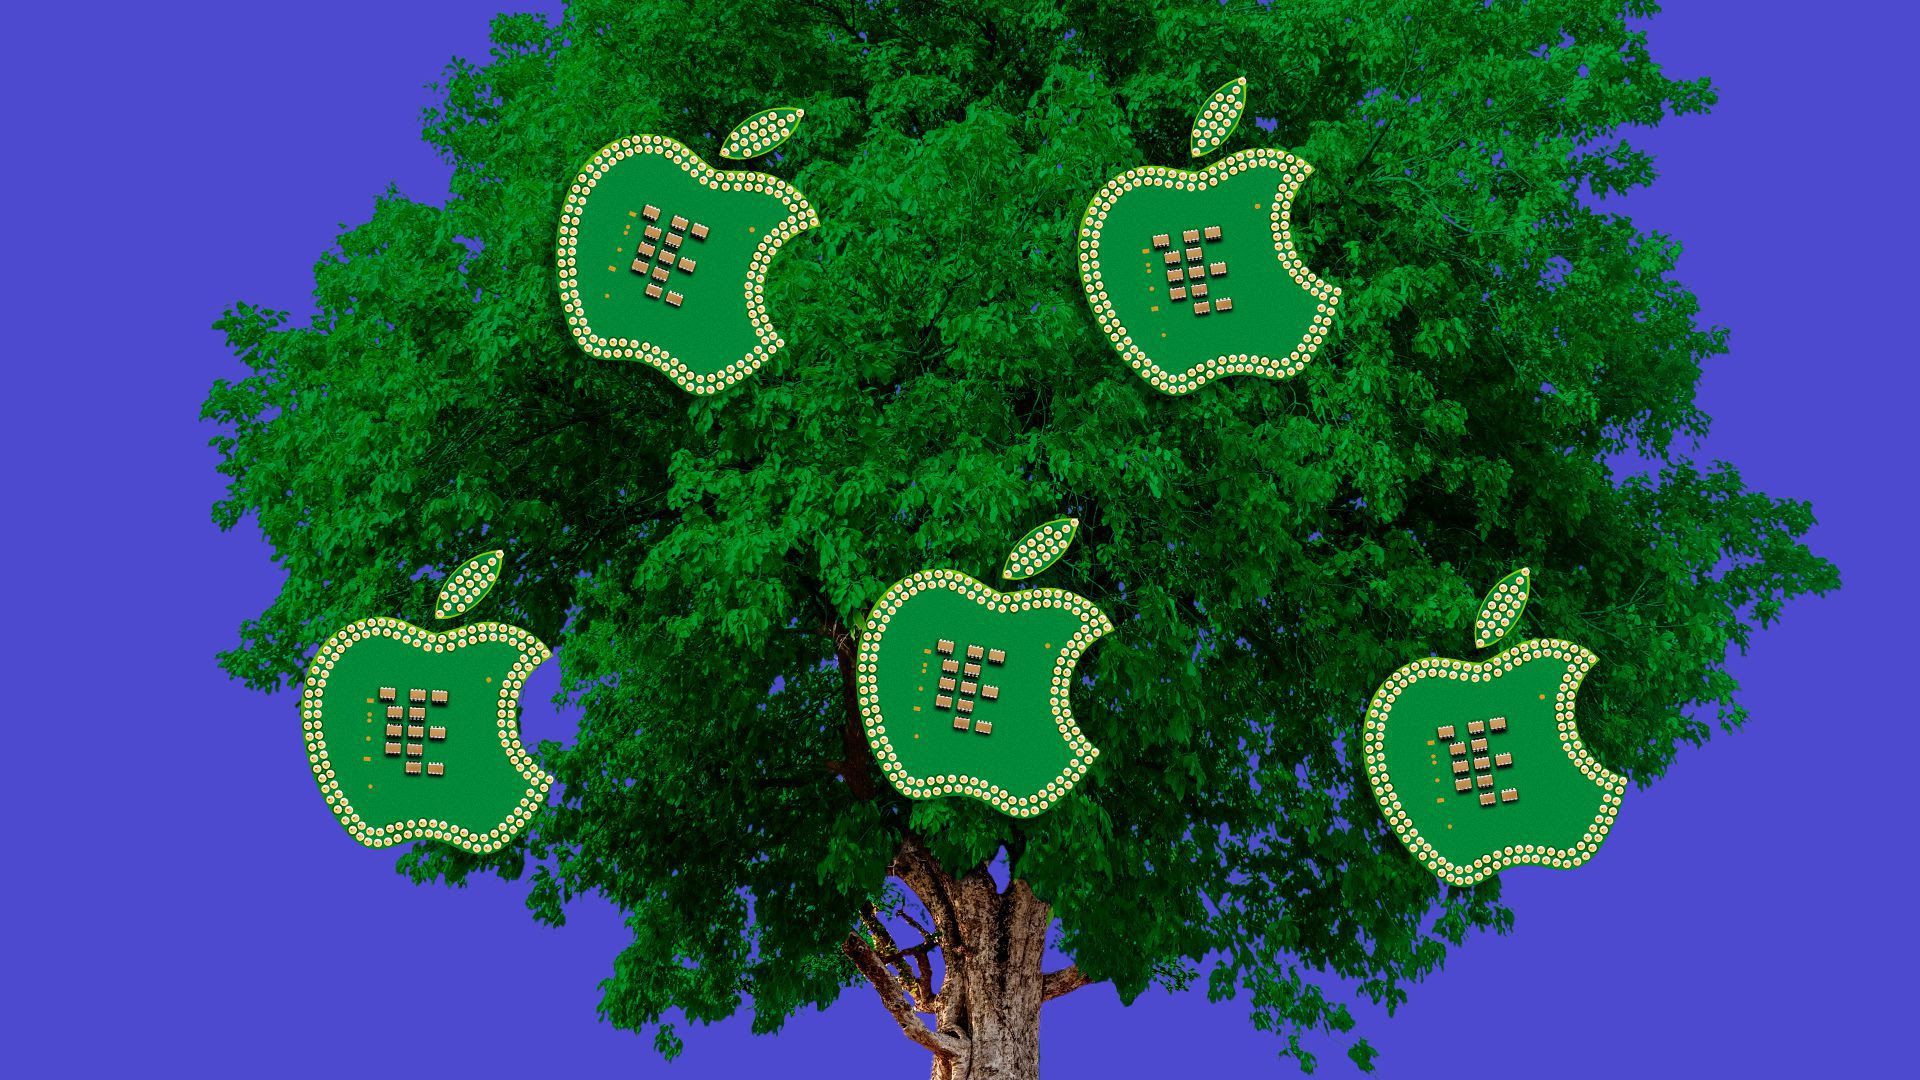 digital apples in a tree